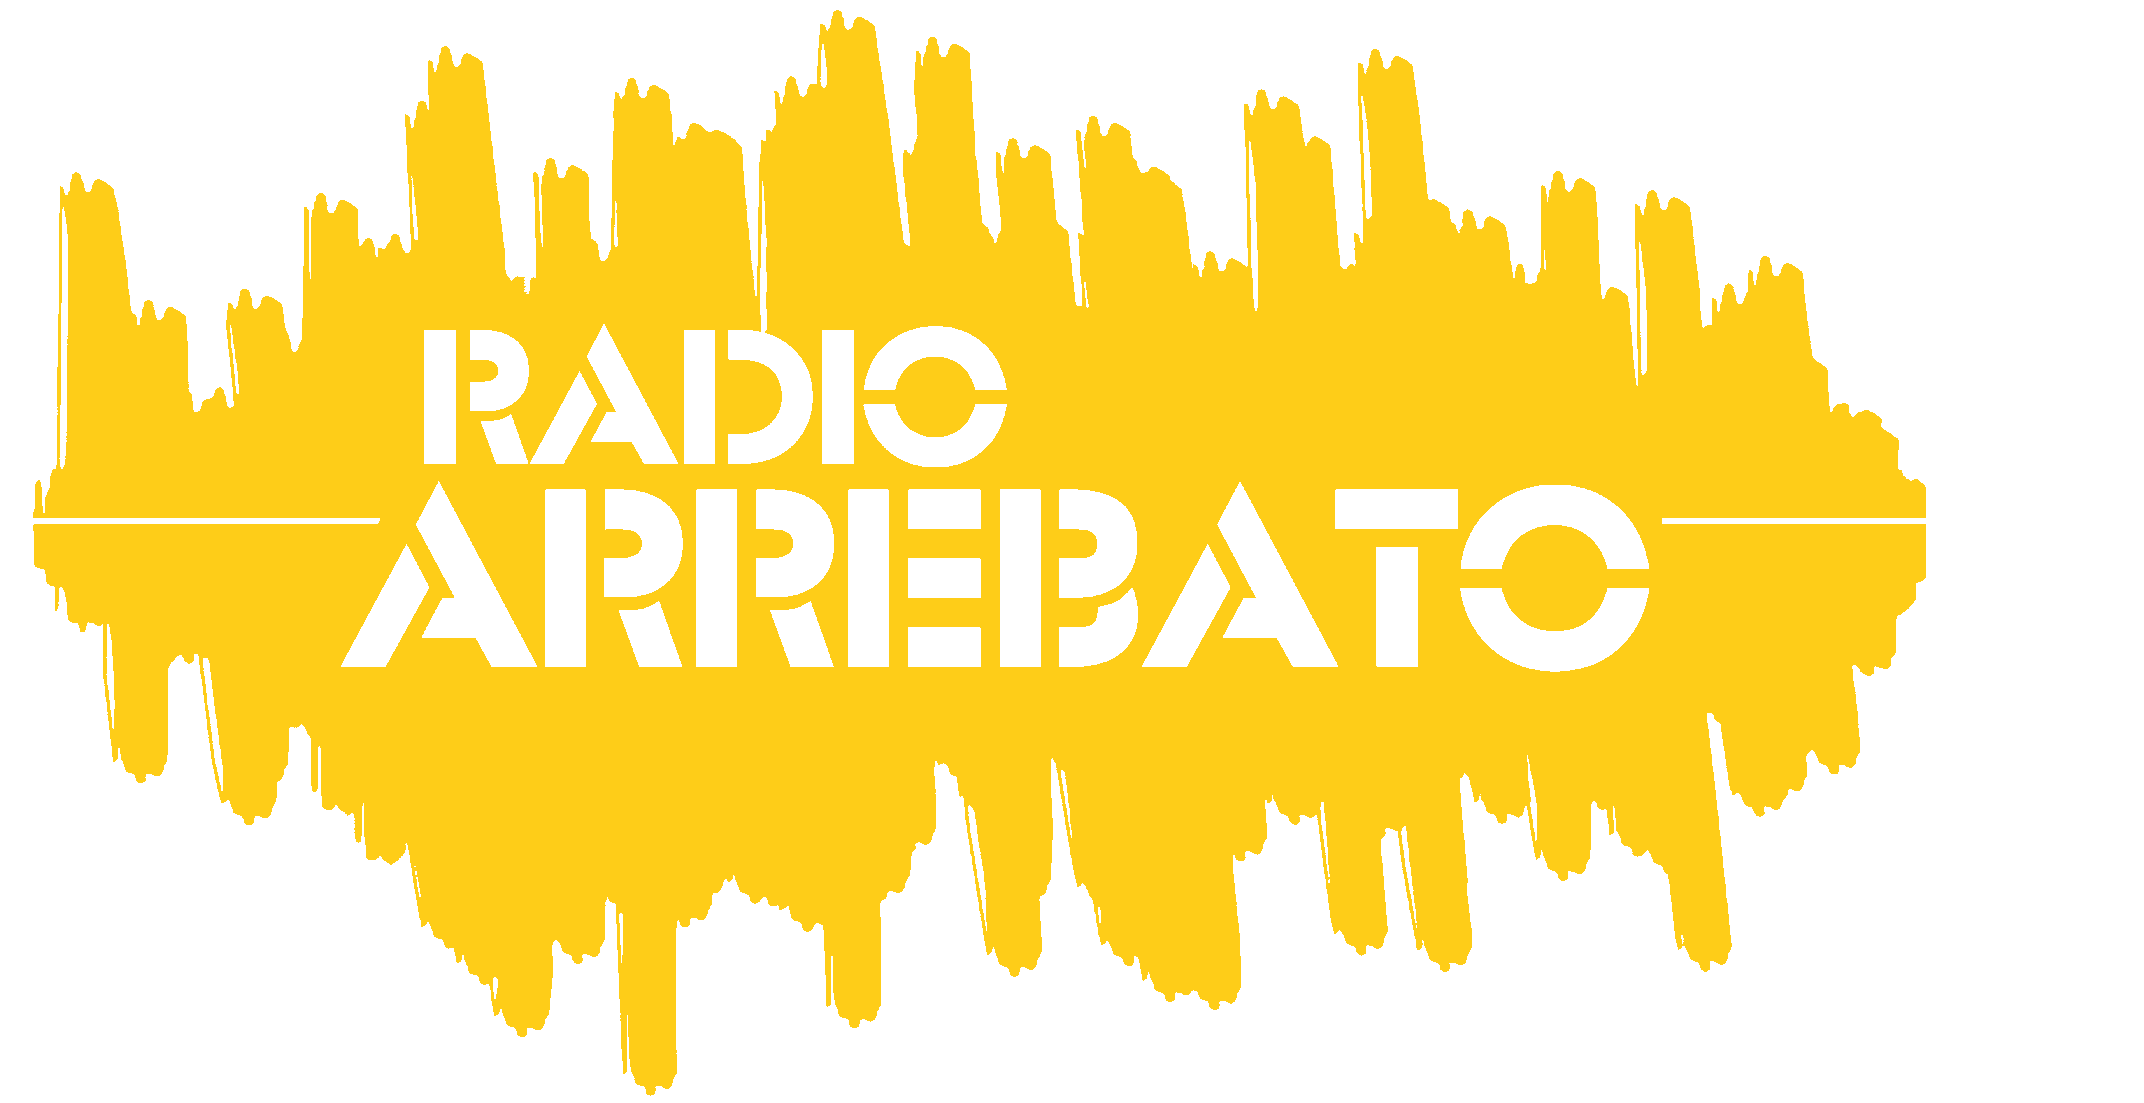 – Radio Arrebato 107.4 FM